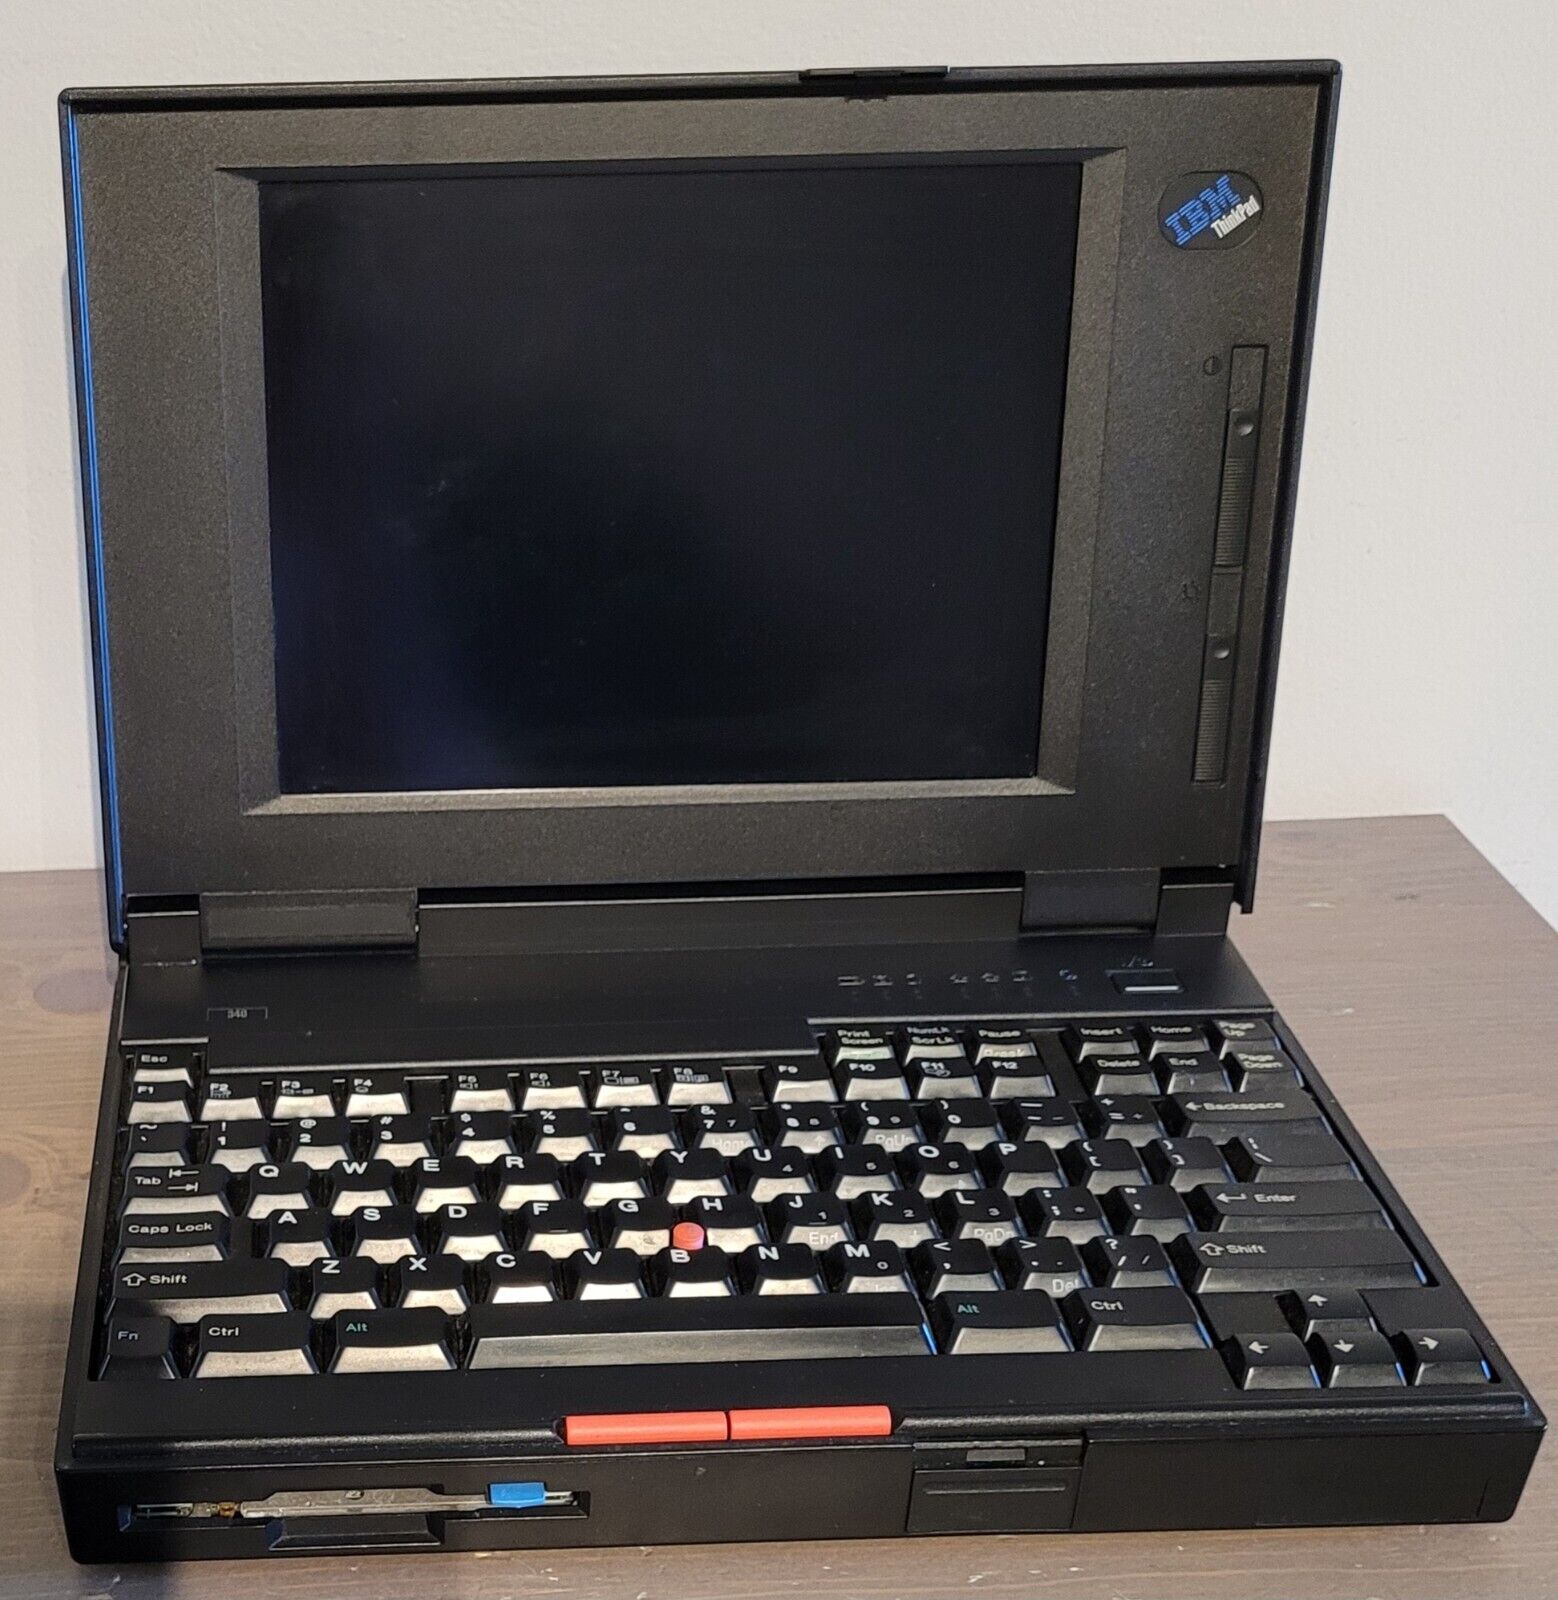 IBM ThinkPad 340 Type 2610 1994 Vintage Laptop Computer PC Rare I.S.S. Model